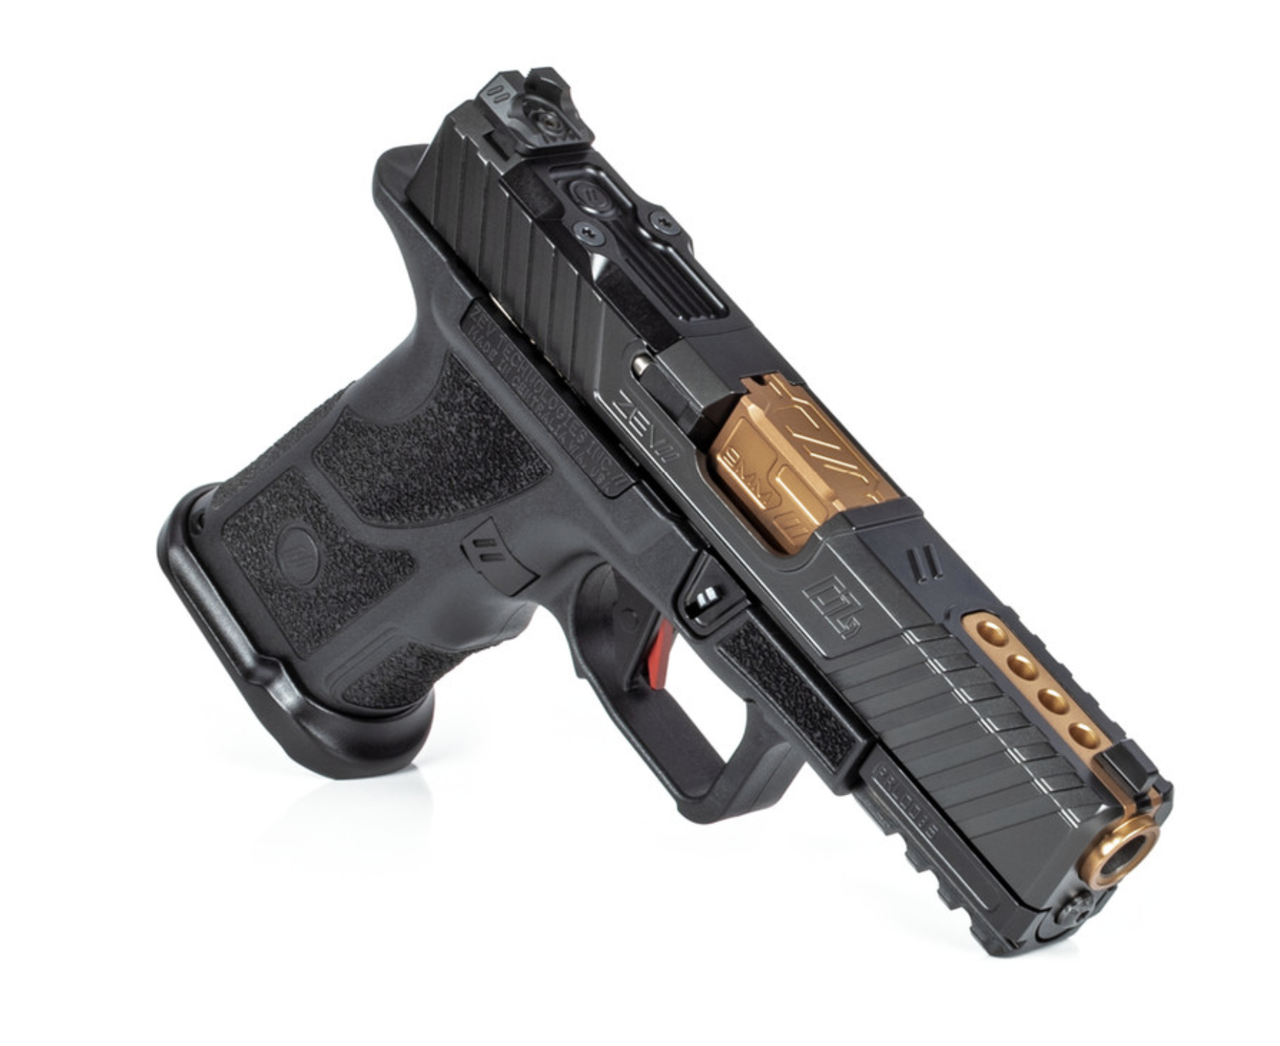 Zev Technology OZ9c Hyper - Comp 9mm Pistol